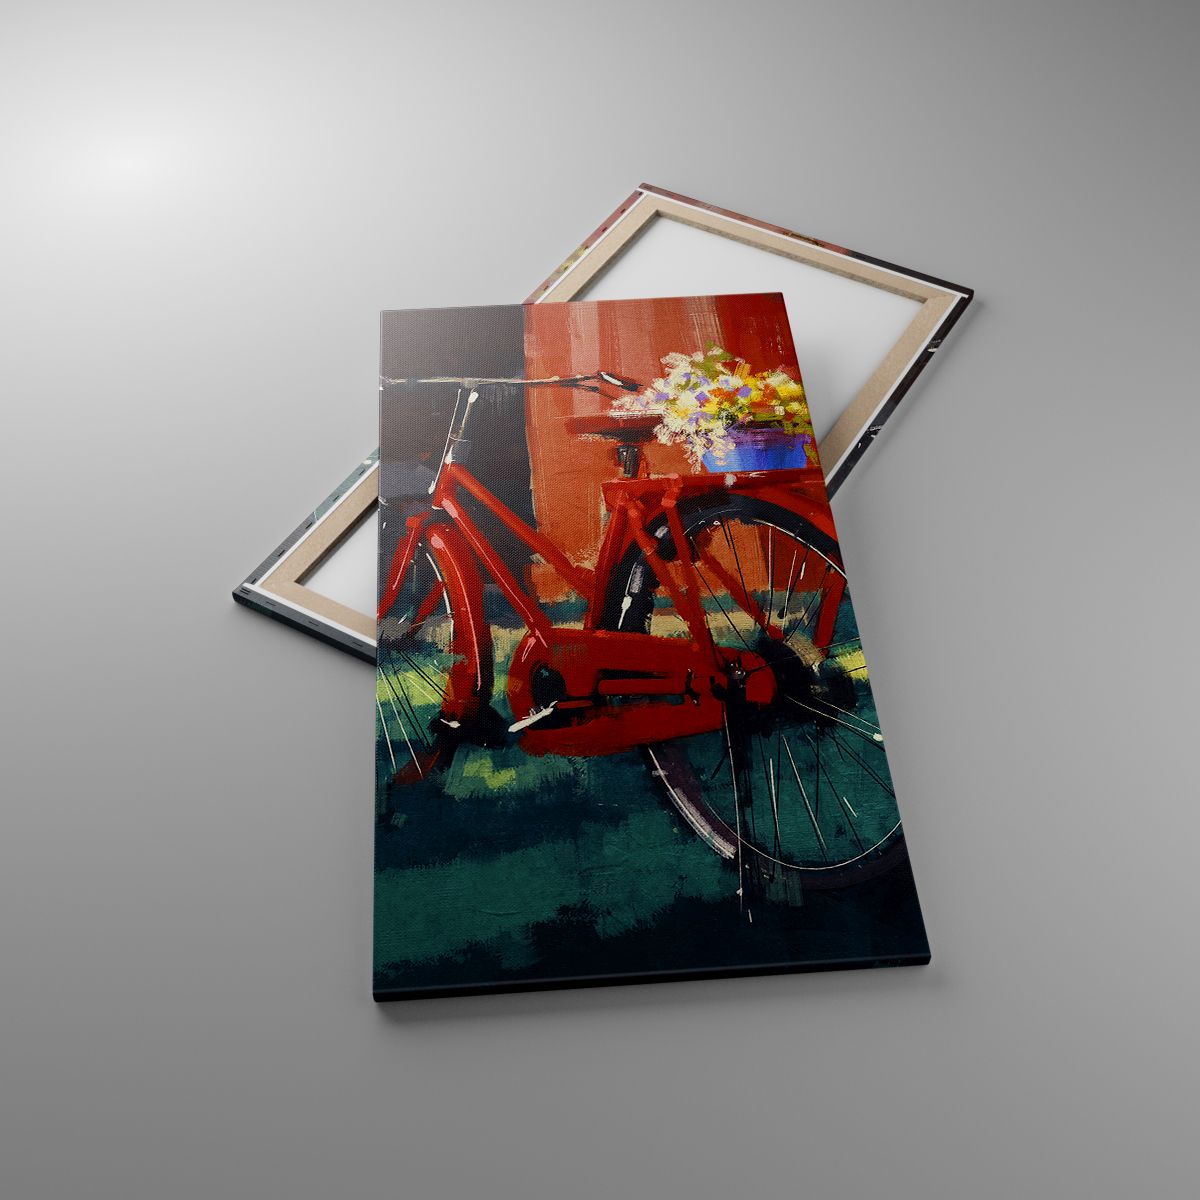 Leinwandbild Oldtimer-Fahrrad, Leinwandbild Blumen Im Topf, Leinwandbild Reise, Leinwandbild Kunst, Leinwandbild Malerei